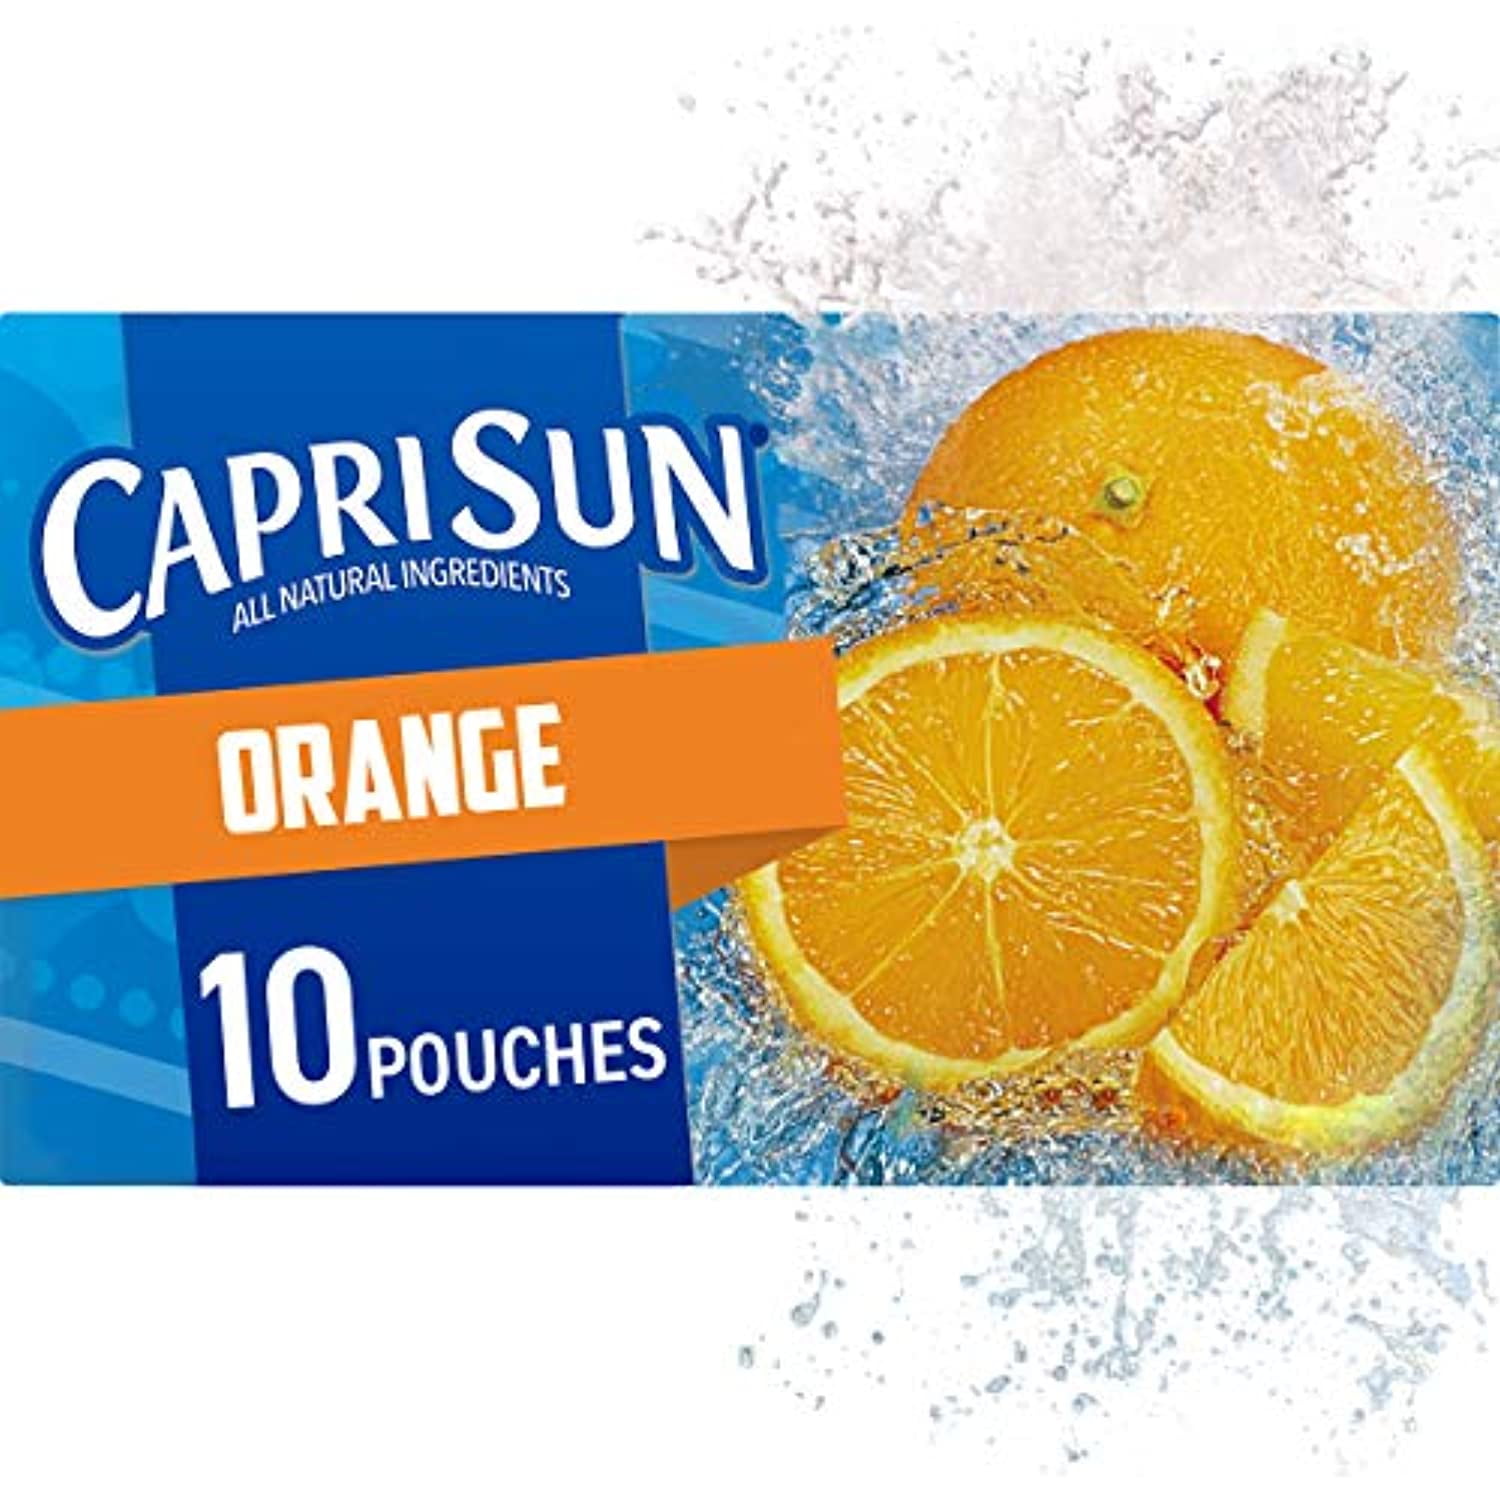 Capri Sun Orange Ready-To-Drink Juice (10 Pouches)